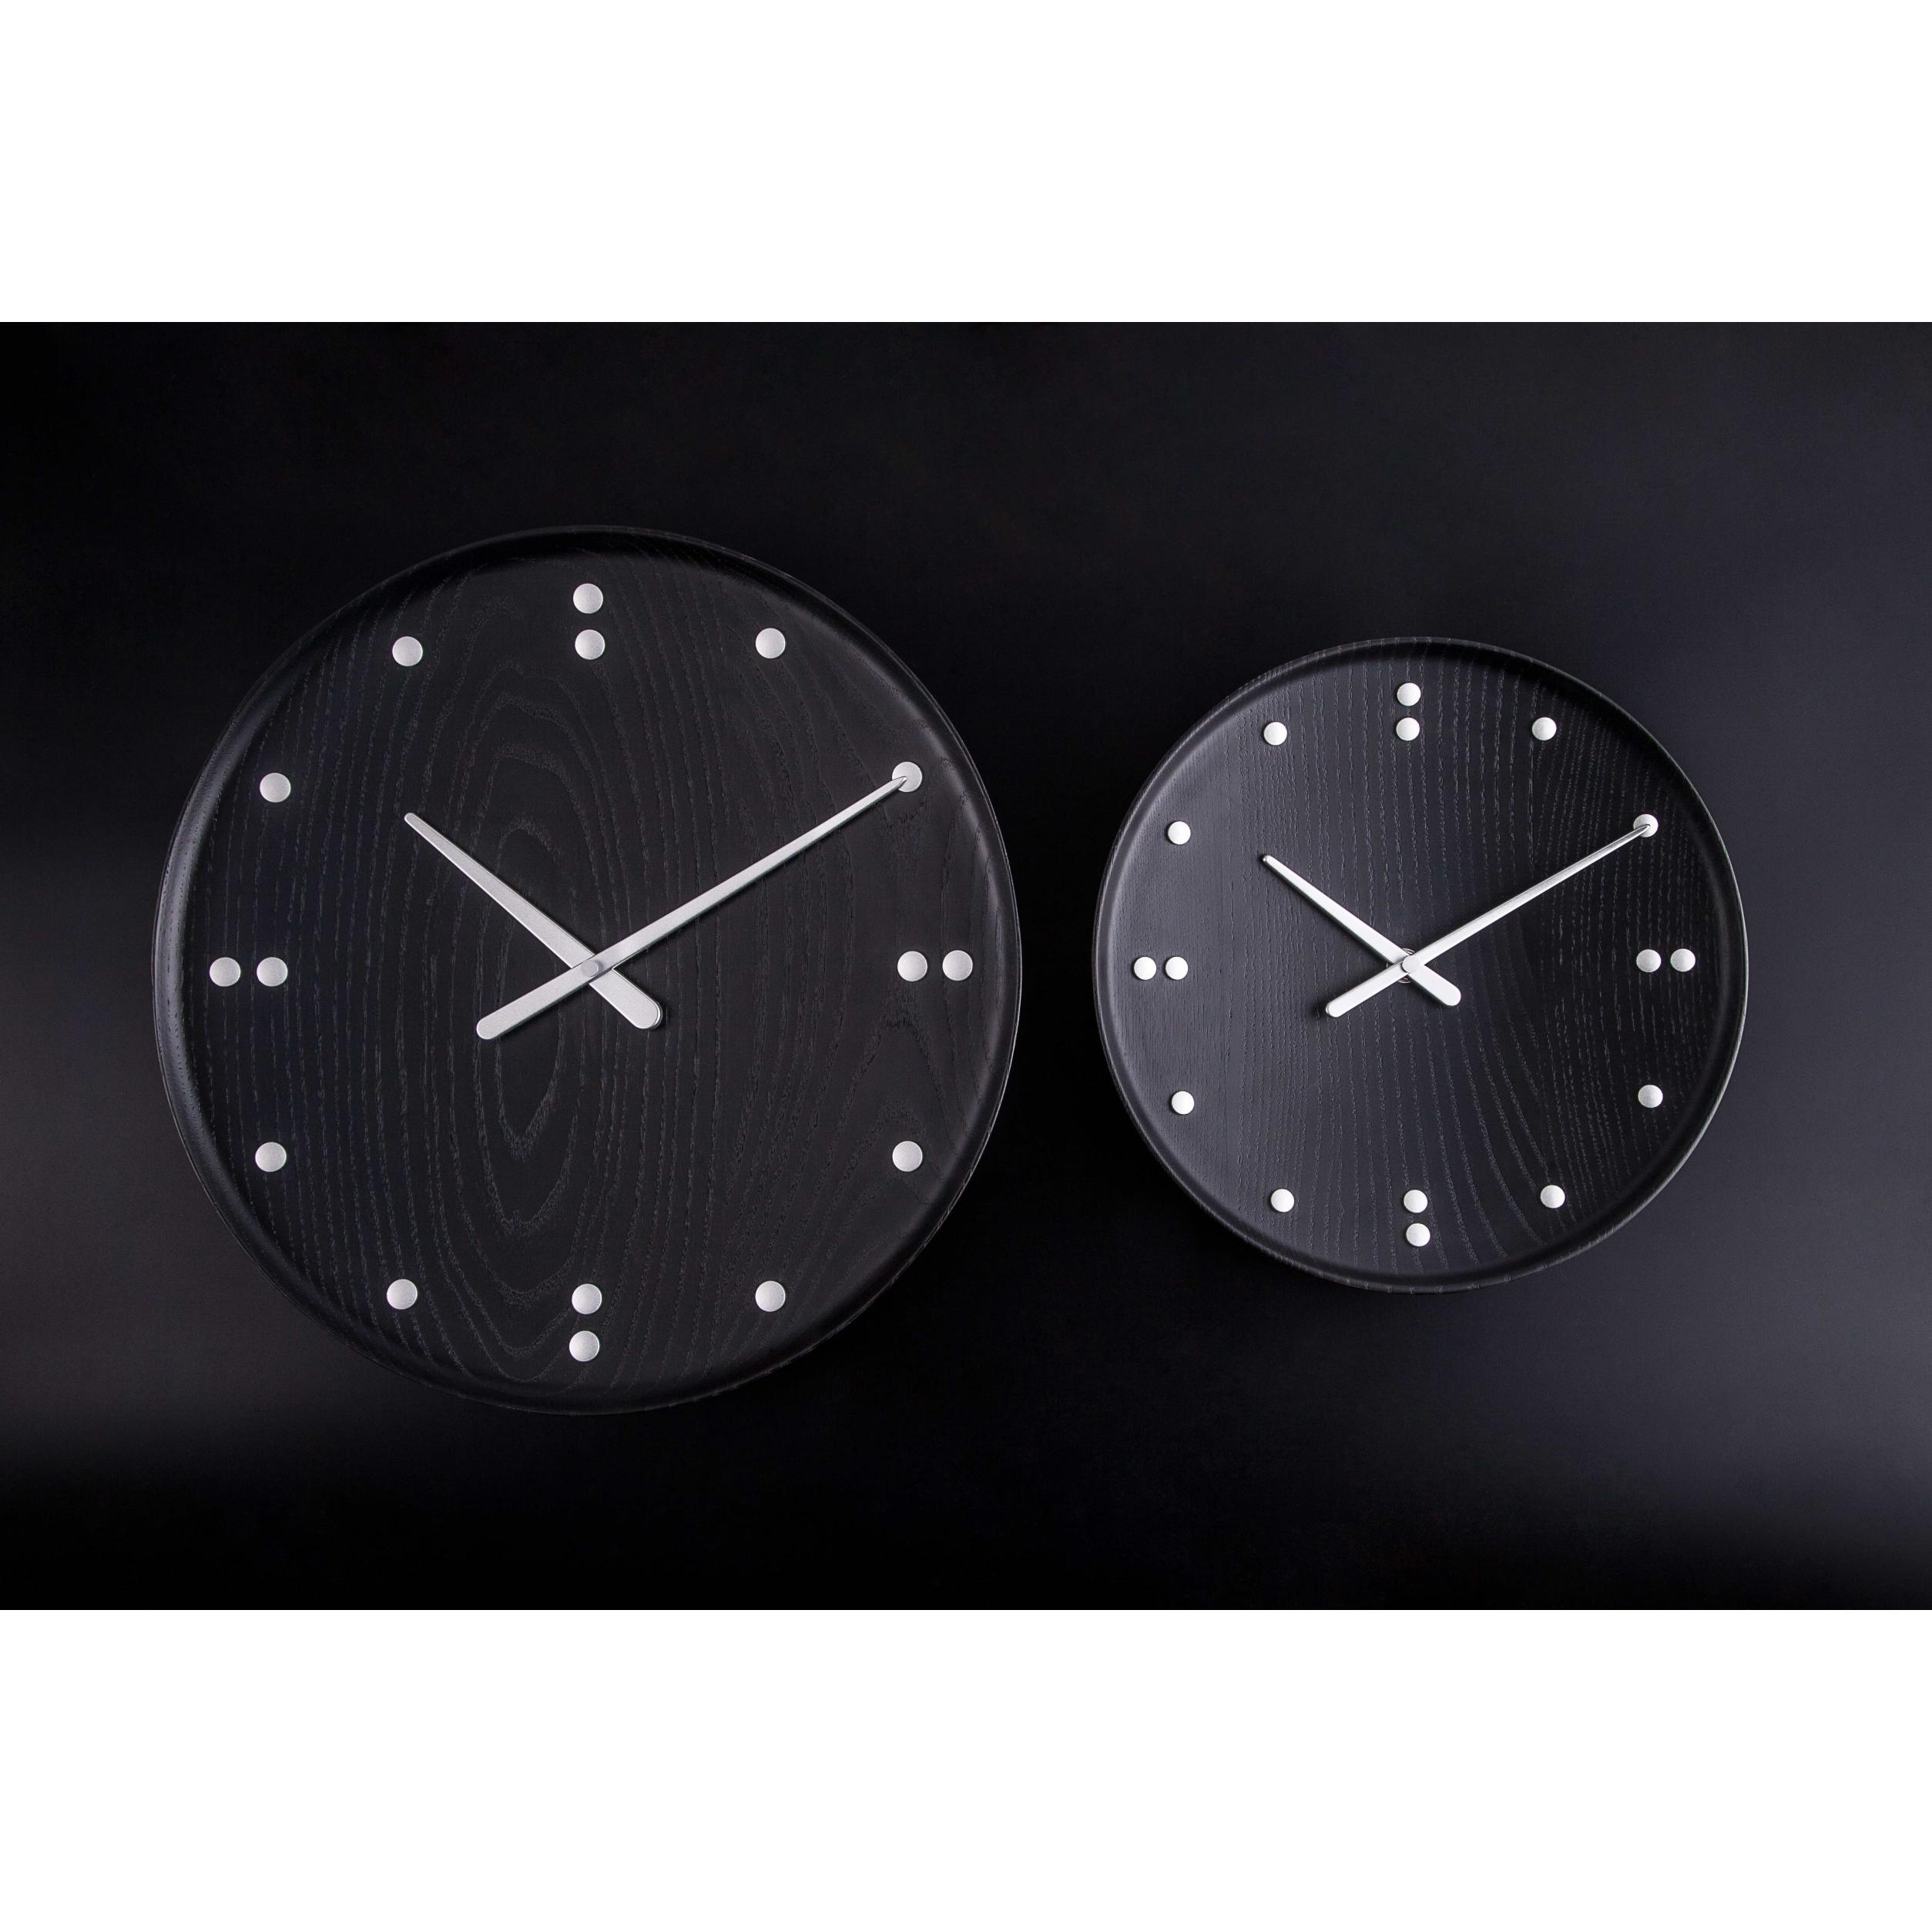 Architectmade Finn Juhl Reloj de pared Ceniza negra, Ø25 cm